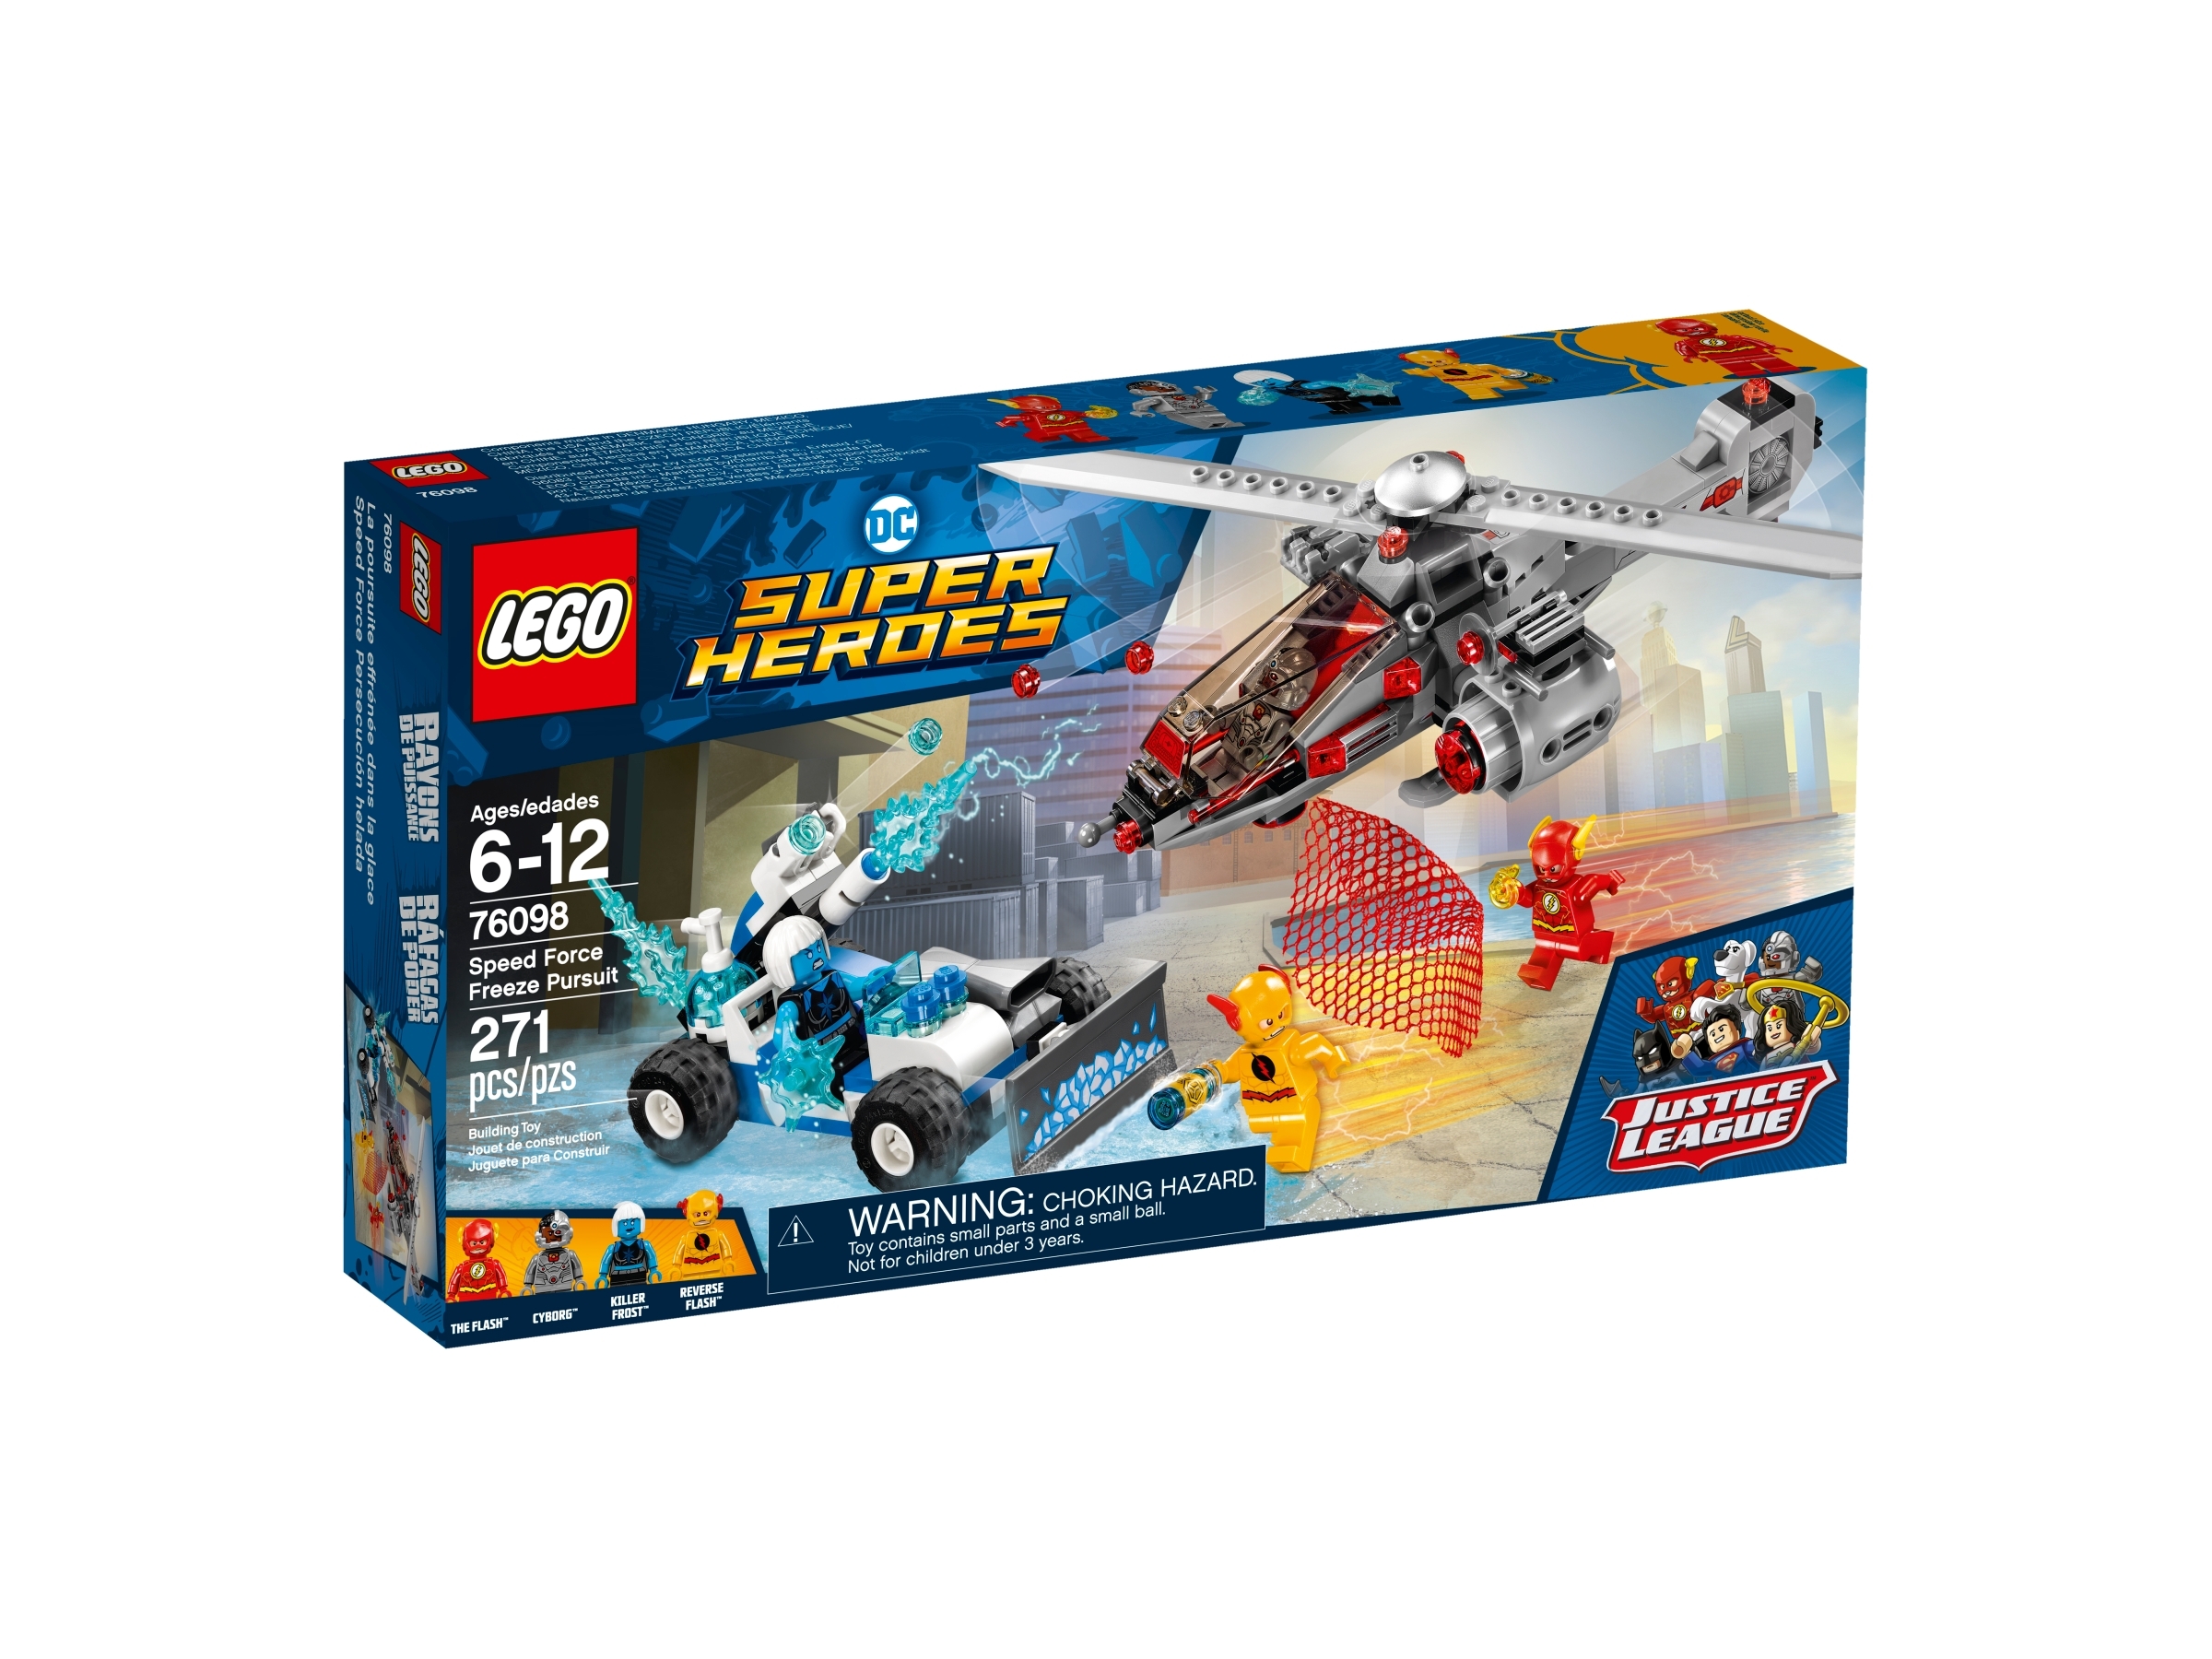 radius Australsk person Skalk Speed Force Freeze Pursuit 76098 | DC | Buy online at the Official LEGO®  Shop US